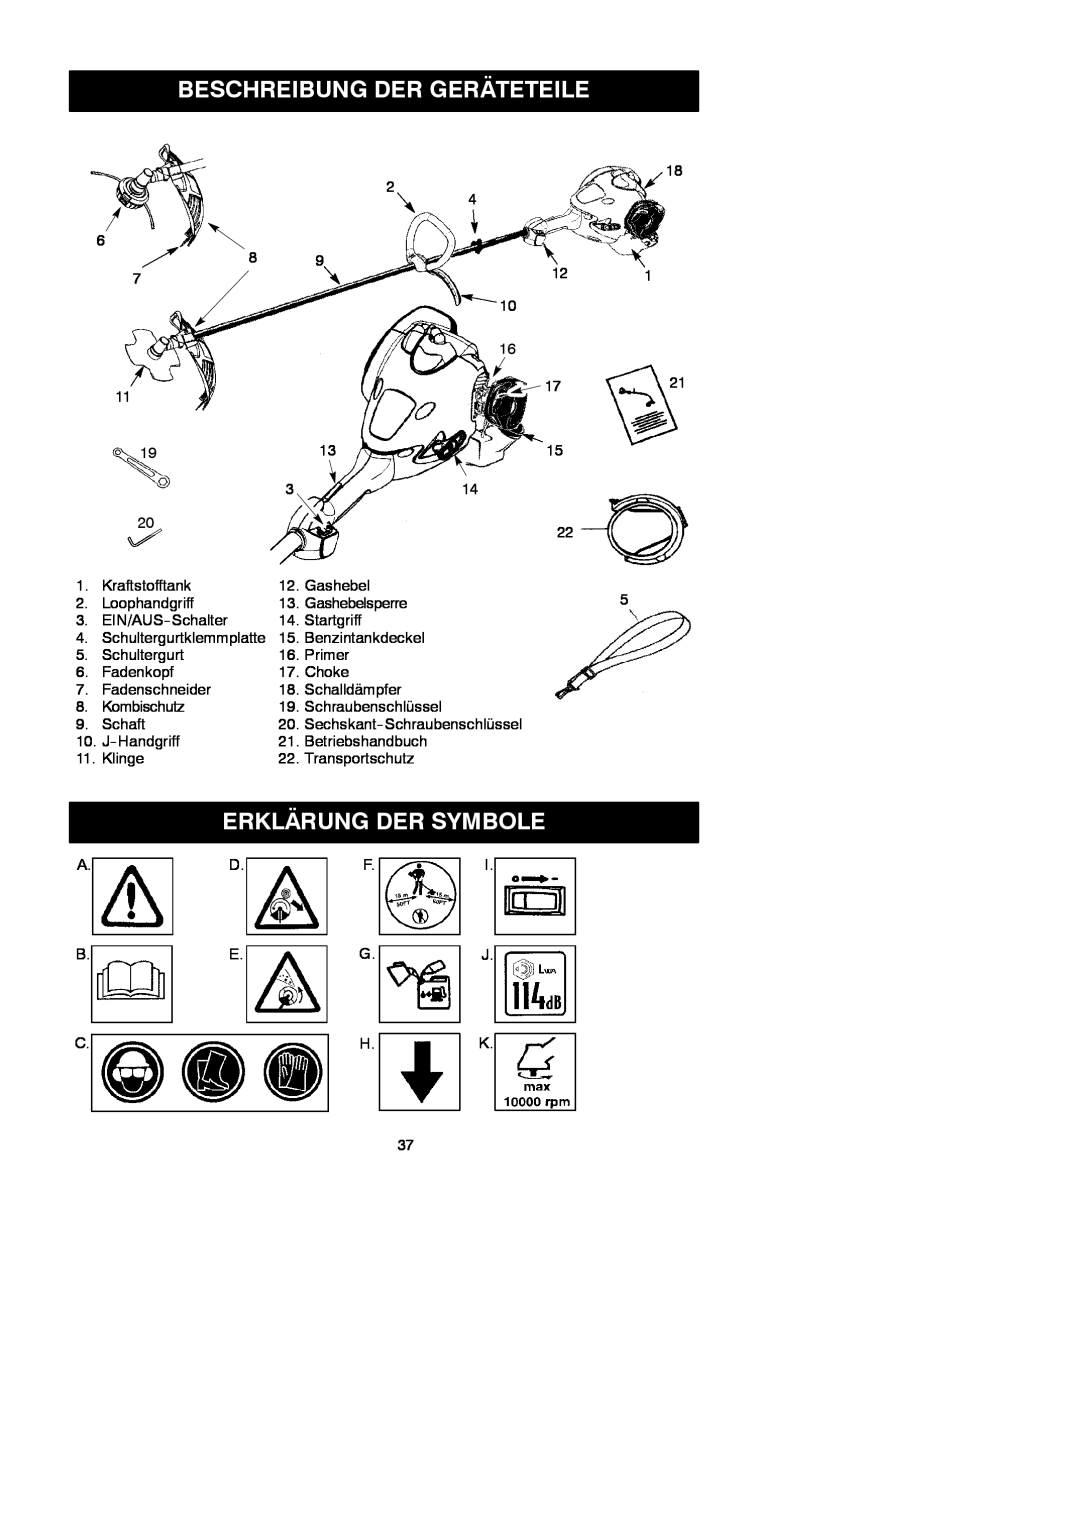 McCulloch MAC 250 L instruction manual Beschreibung Der Geräteteile, Erklärung Der Symbole 